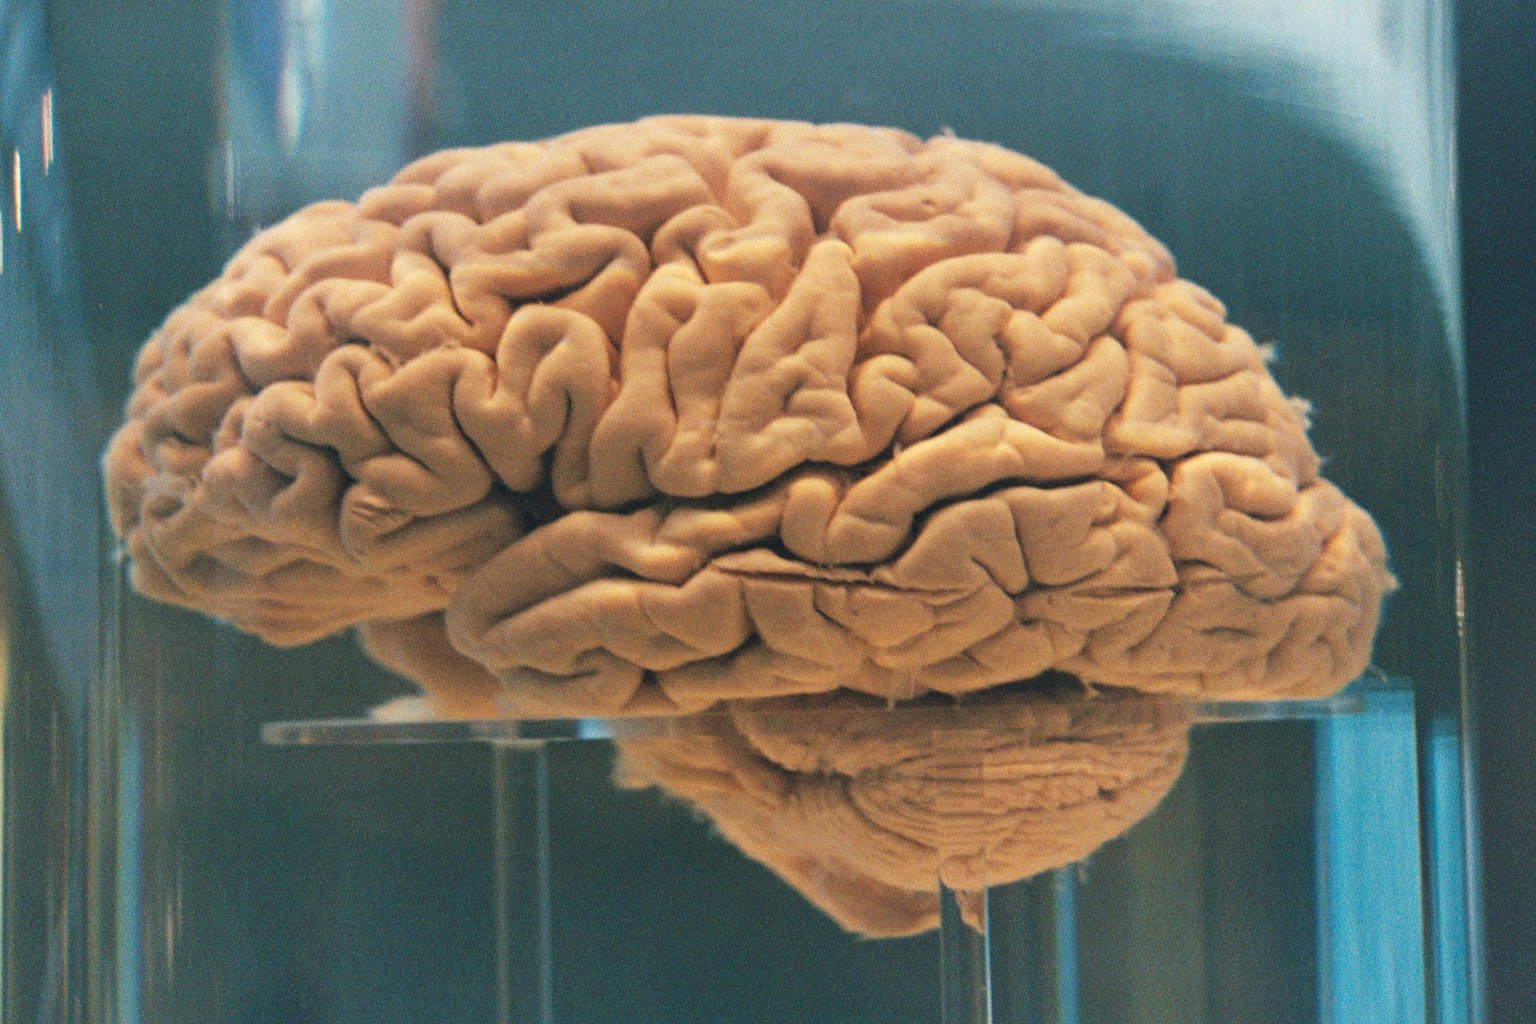 Brain фото. Настоящий человеческий мозг. Натовщий мозг человека.